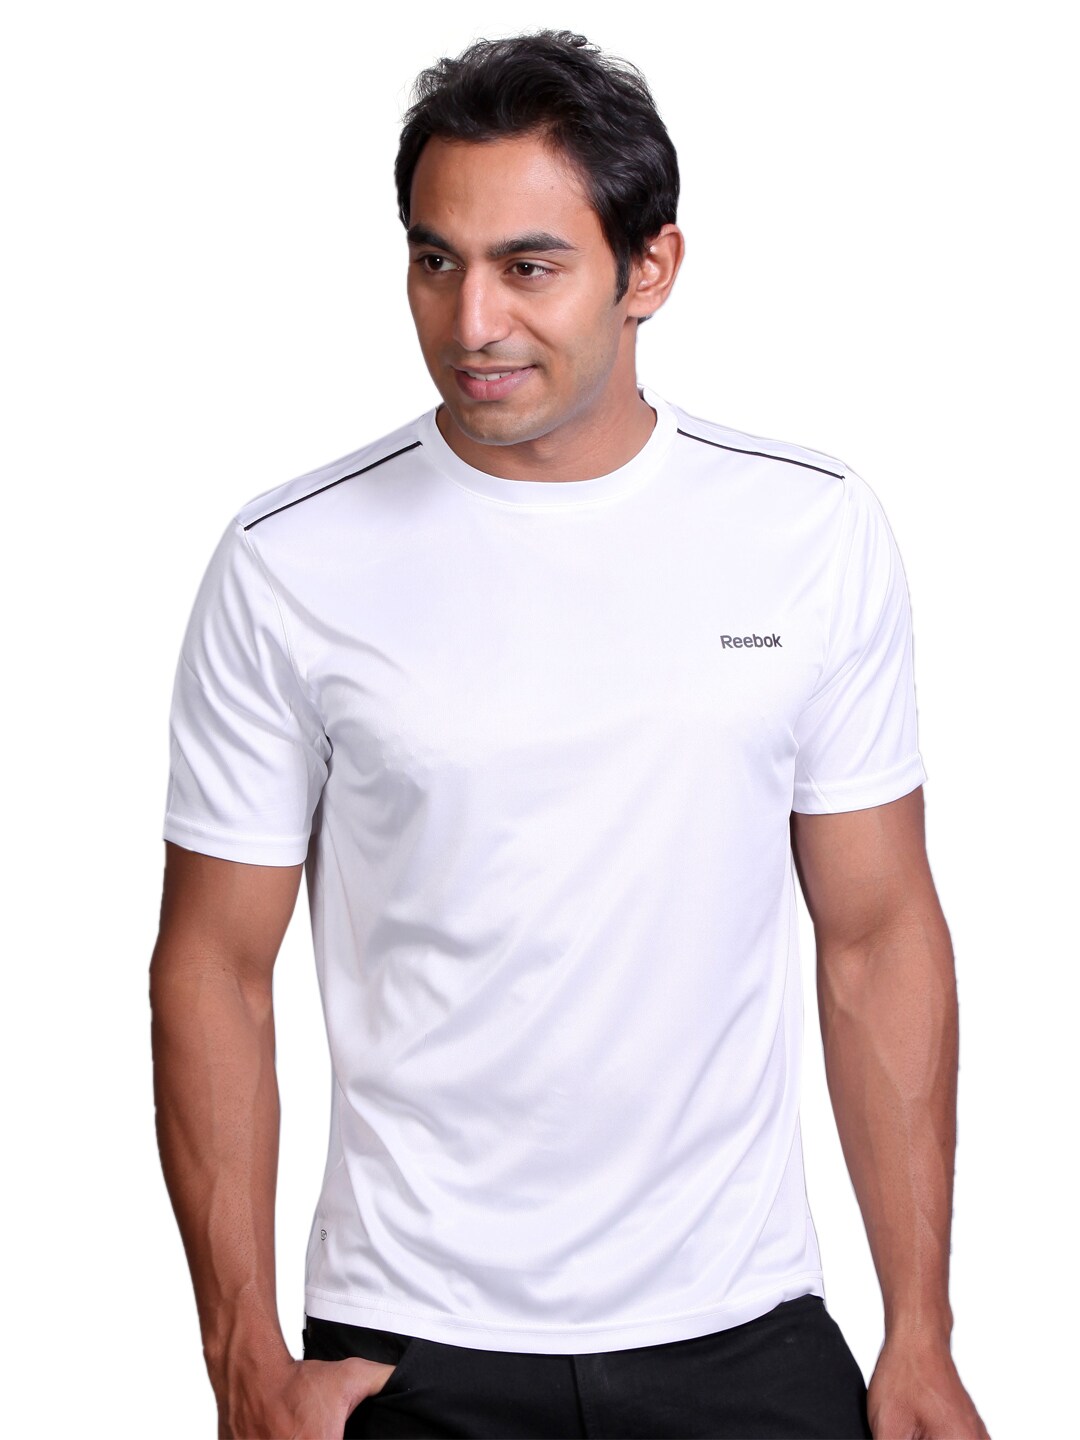 Reebok Men Excellence White T-shirt